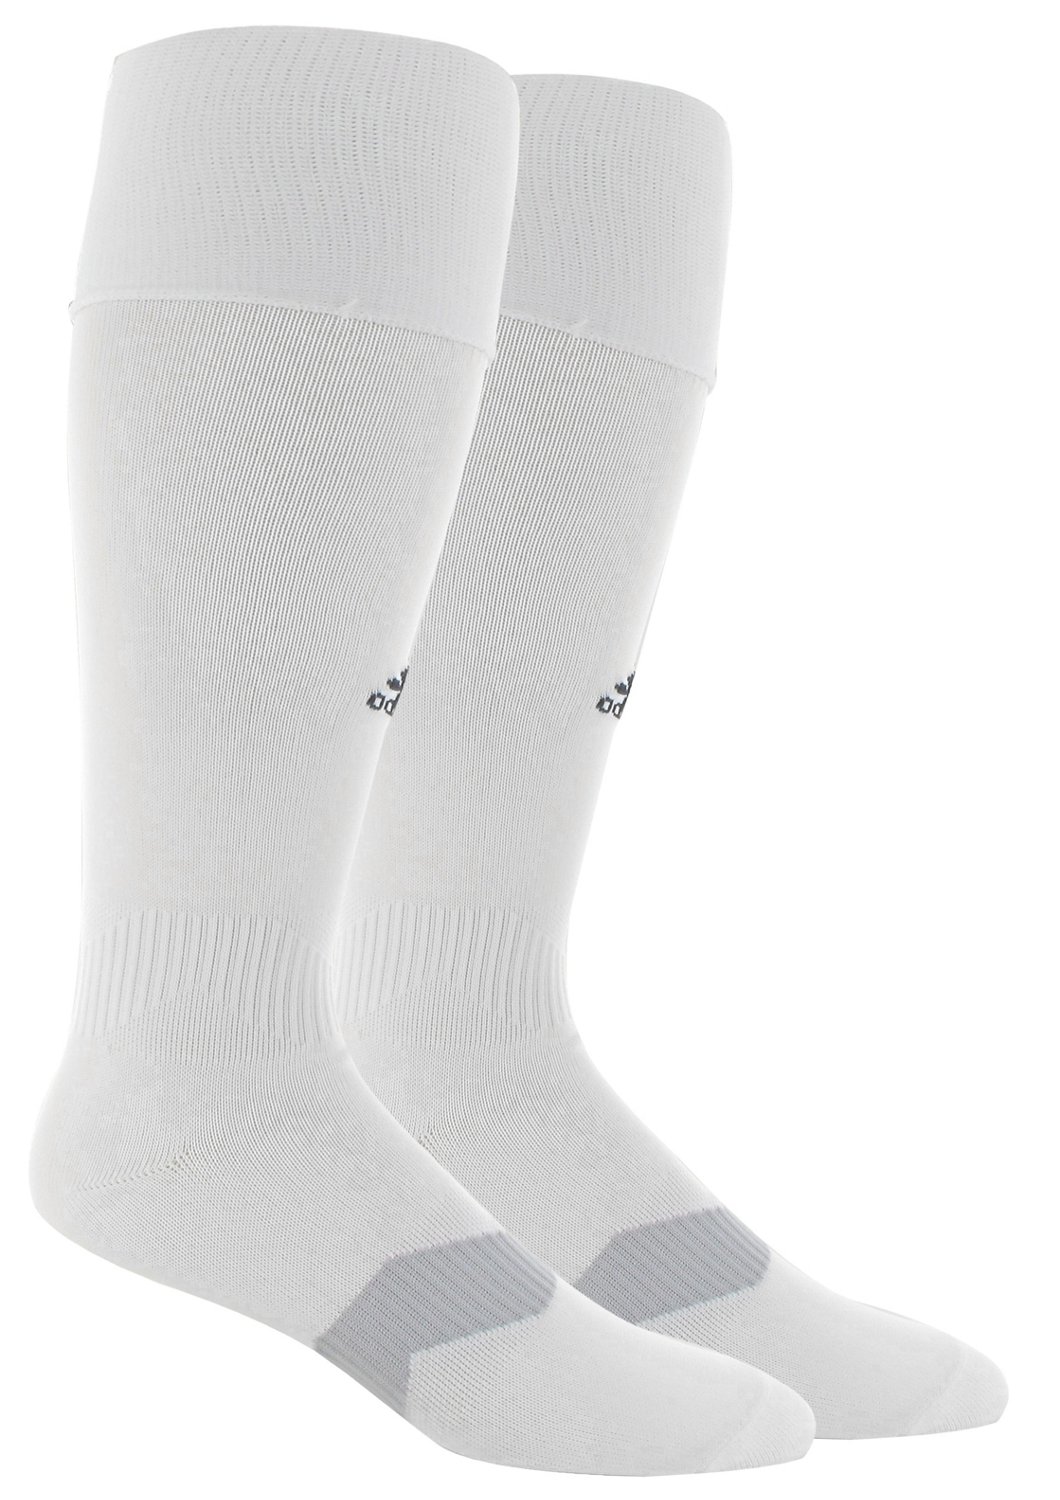 adidas Adults Metro Over the Calf Soccer Socks